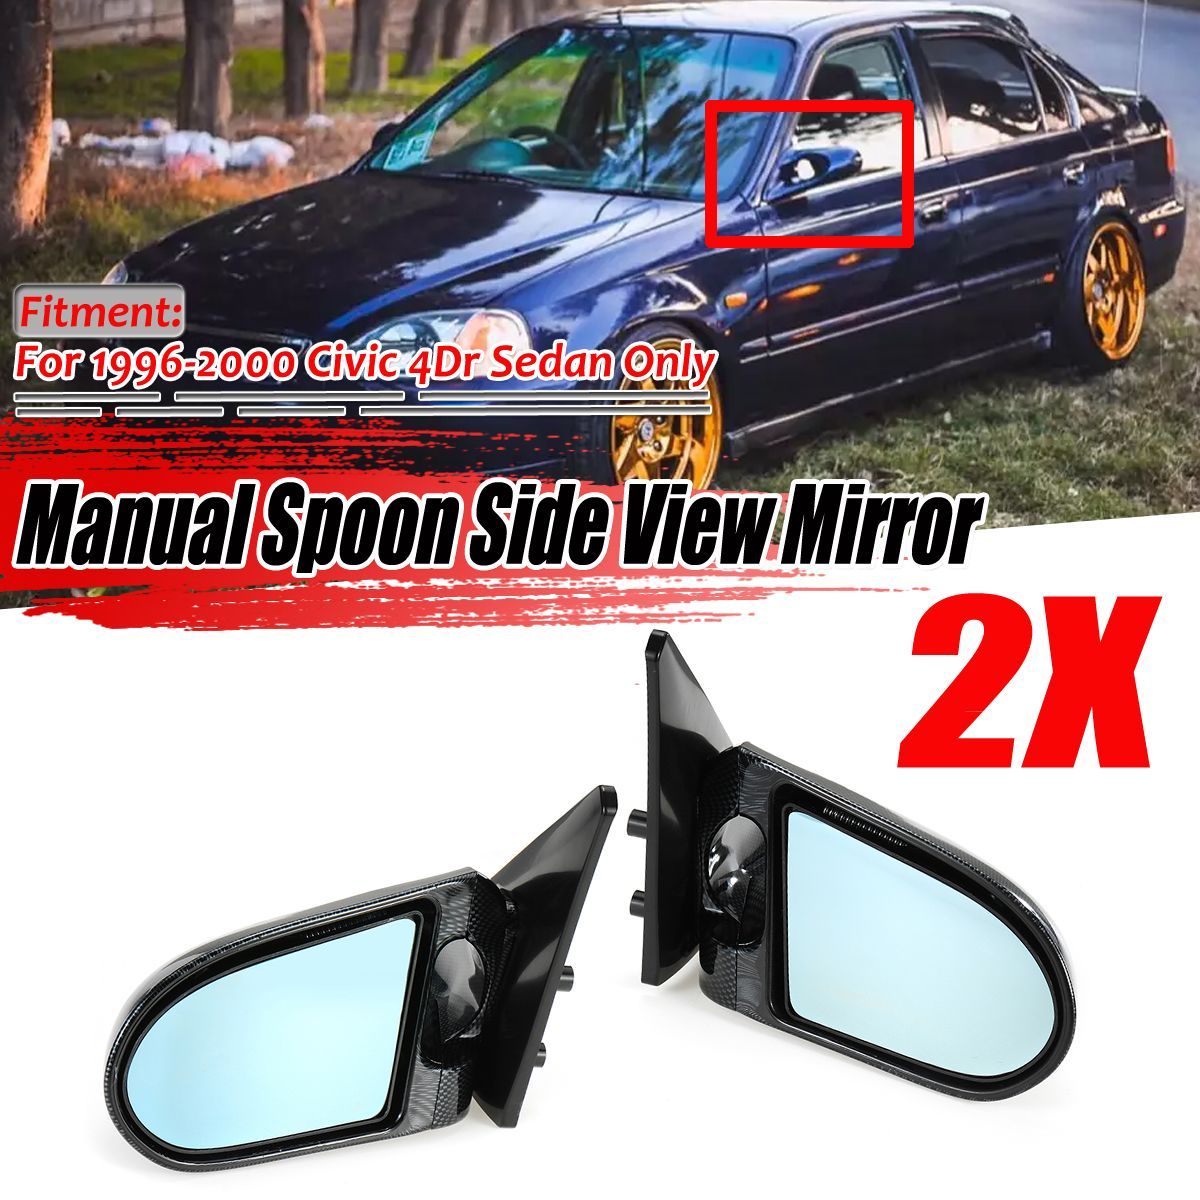 Car-Manual-Adjustable-Side-View-Mirror-Carbon-Fibre-Spoon-Style-For-Honda-Civic-4Dr-Sedan-1996-2000-1598483